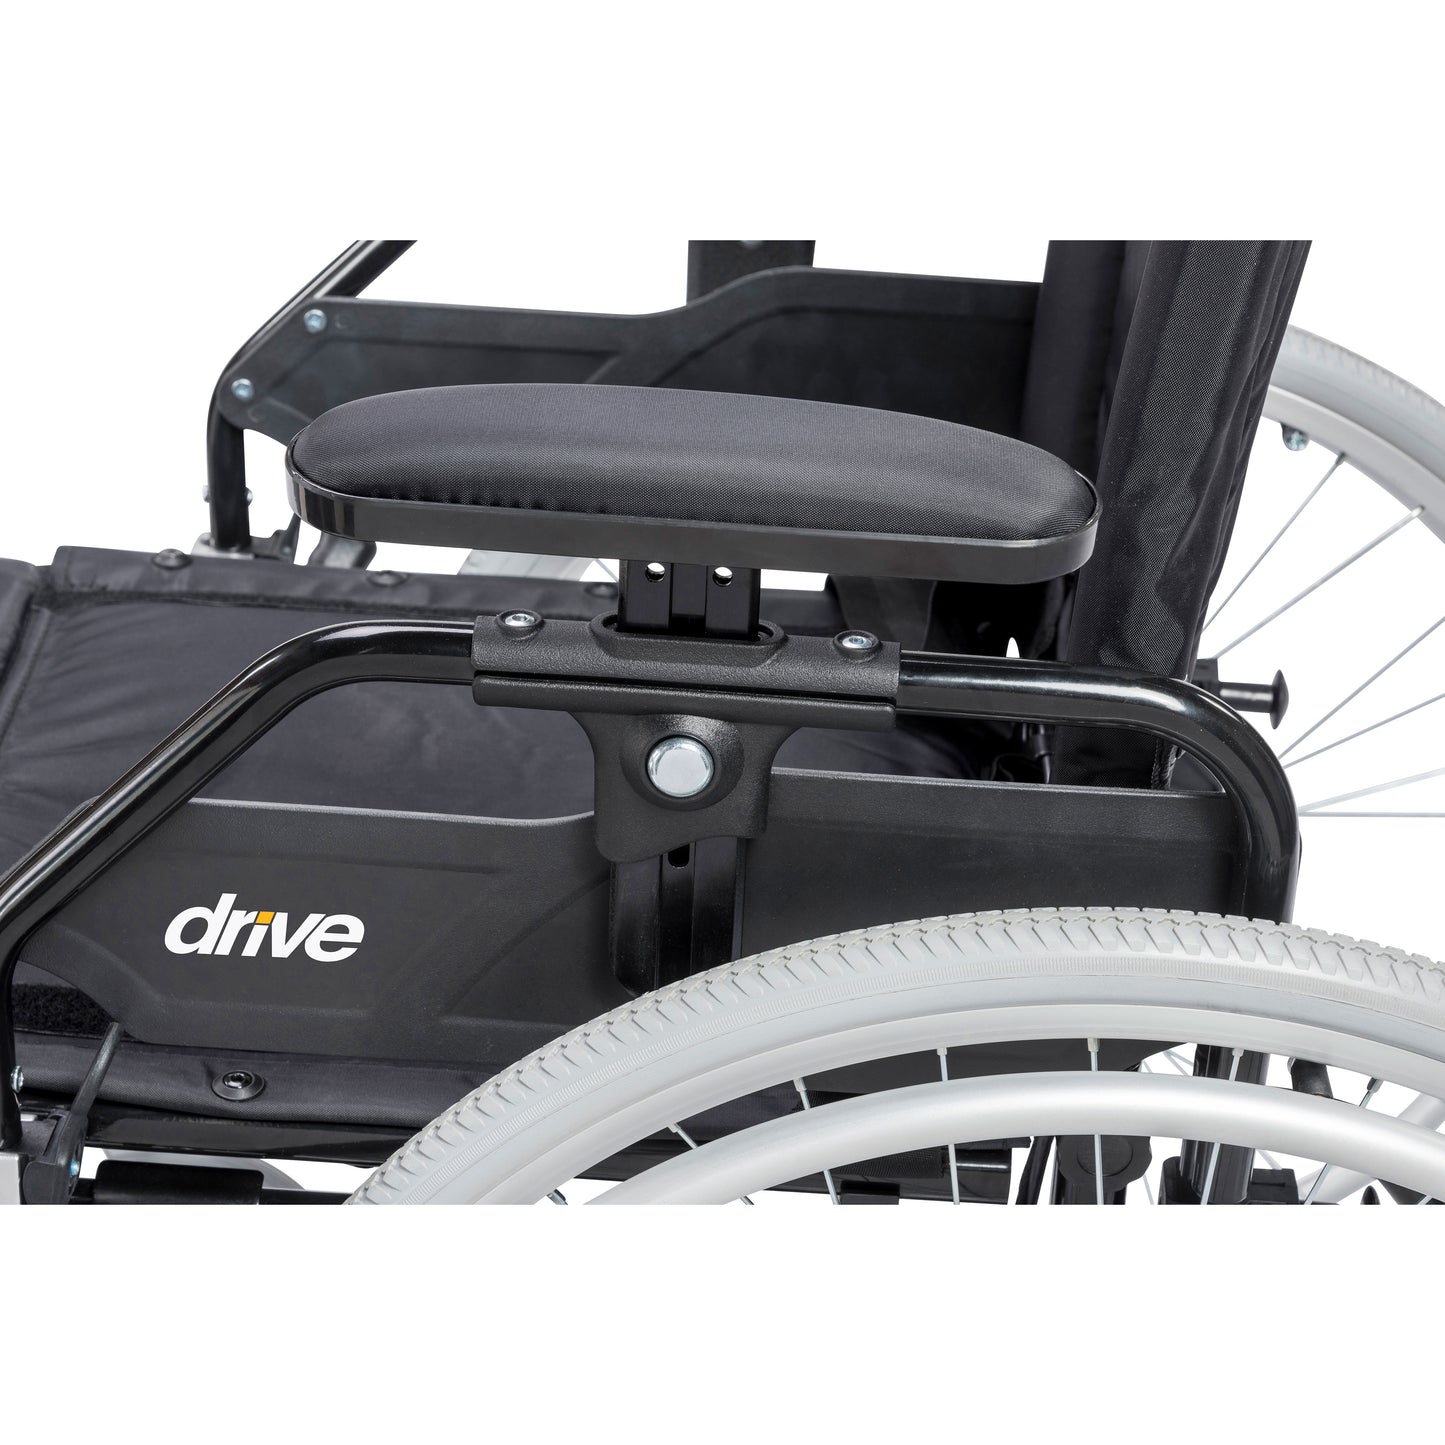 Drive Medical K516FBADDA-SF Lynx Ultra Lightweight Wheelchair, Swing away Footrests, 16" Seat